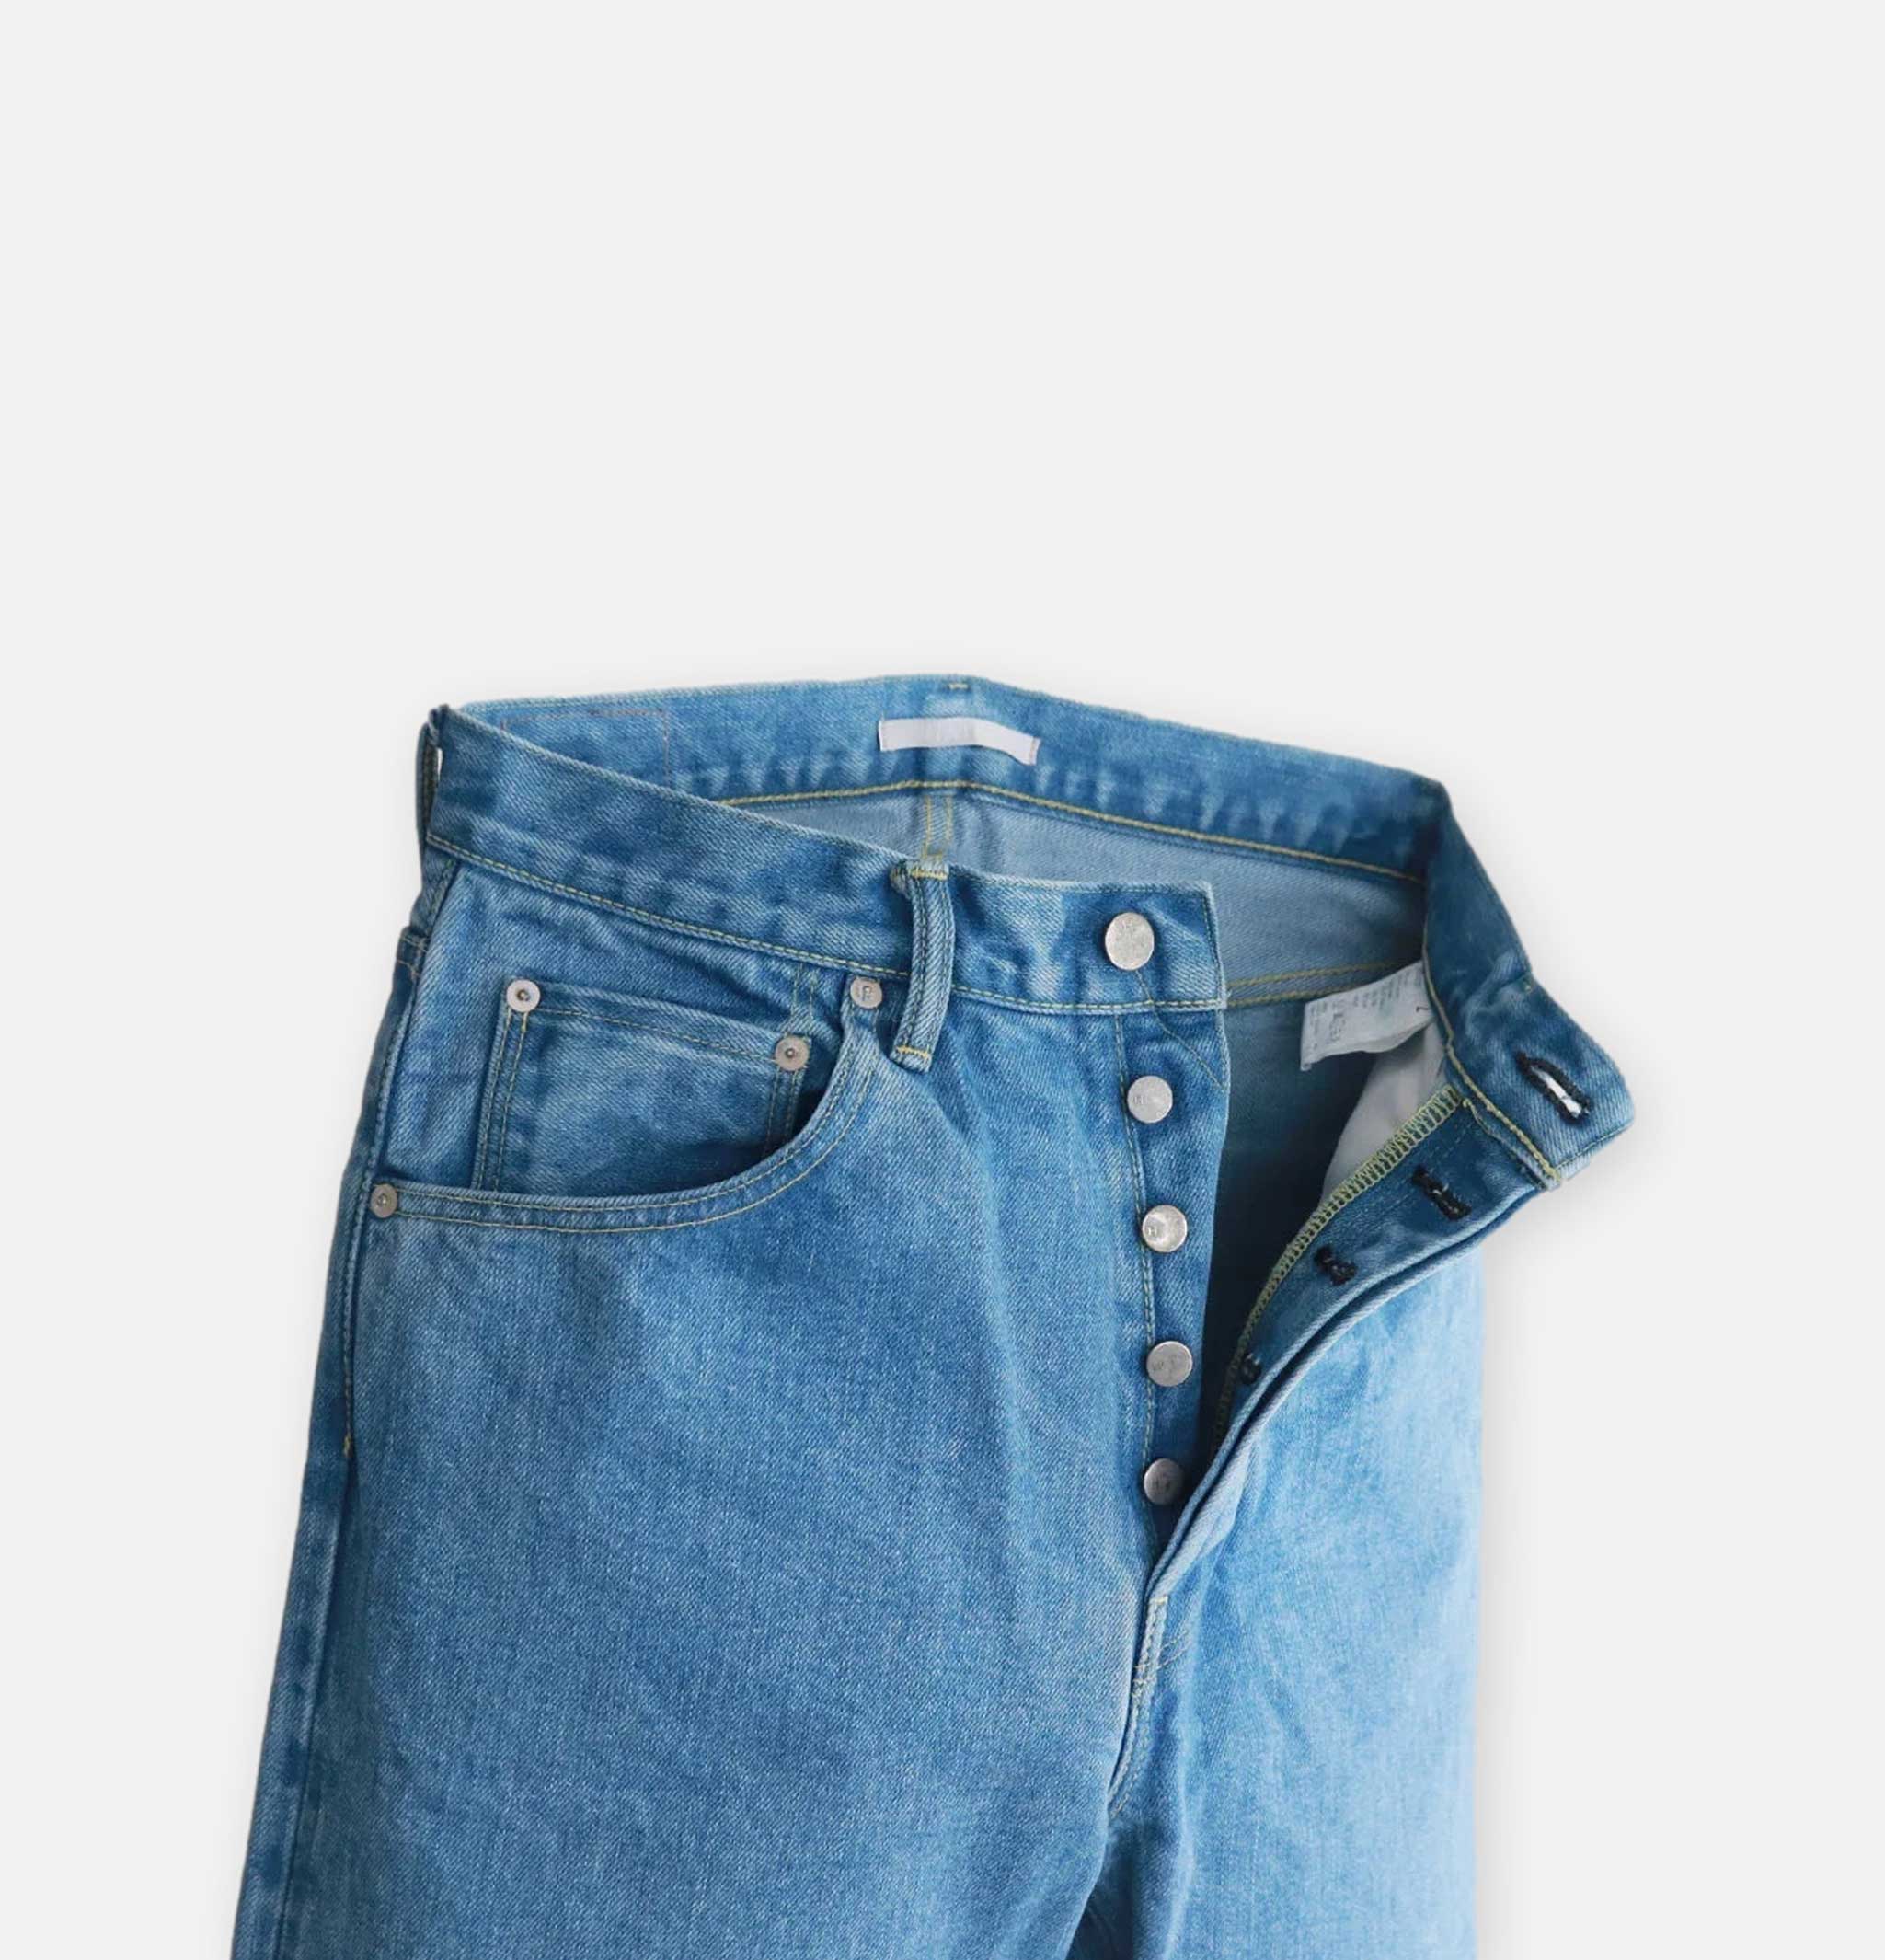 Hatski Jeans 22001 Loose Tapered